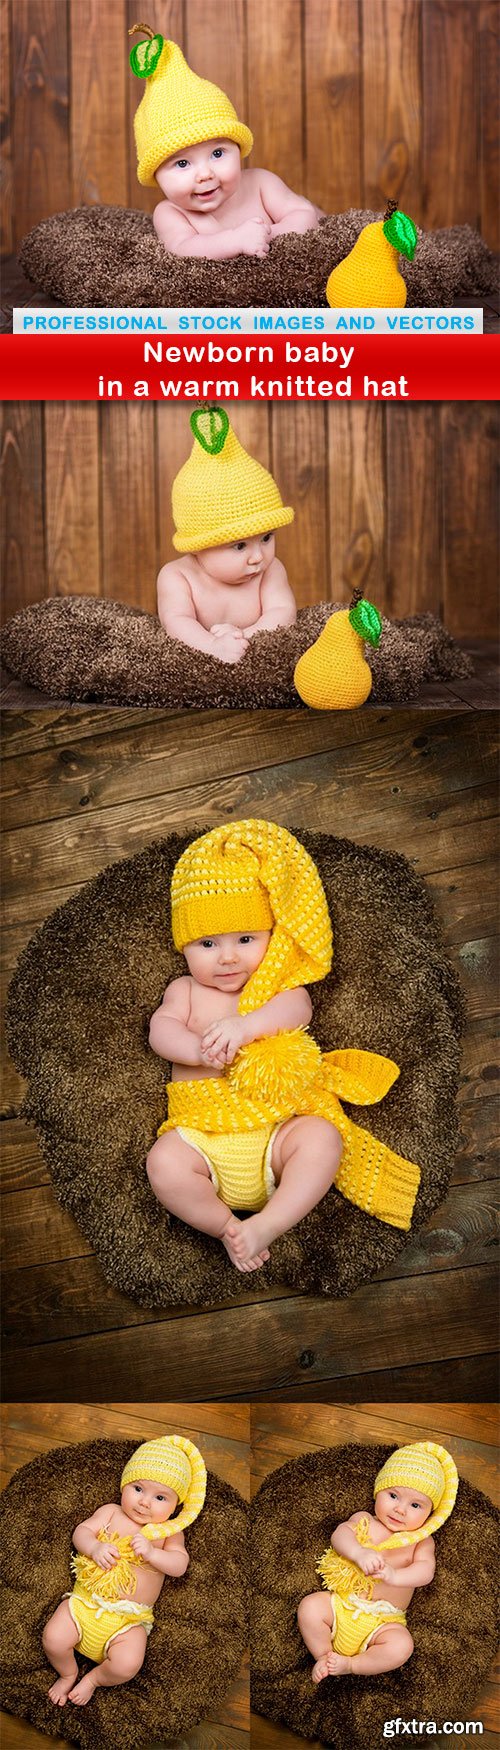 Newborn baby in a warm knitted hat - 5 UHQ JPEG